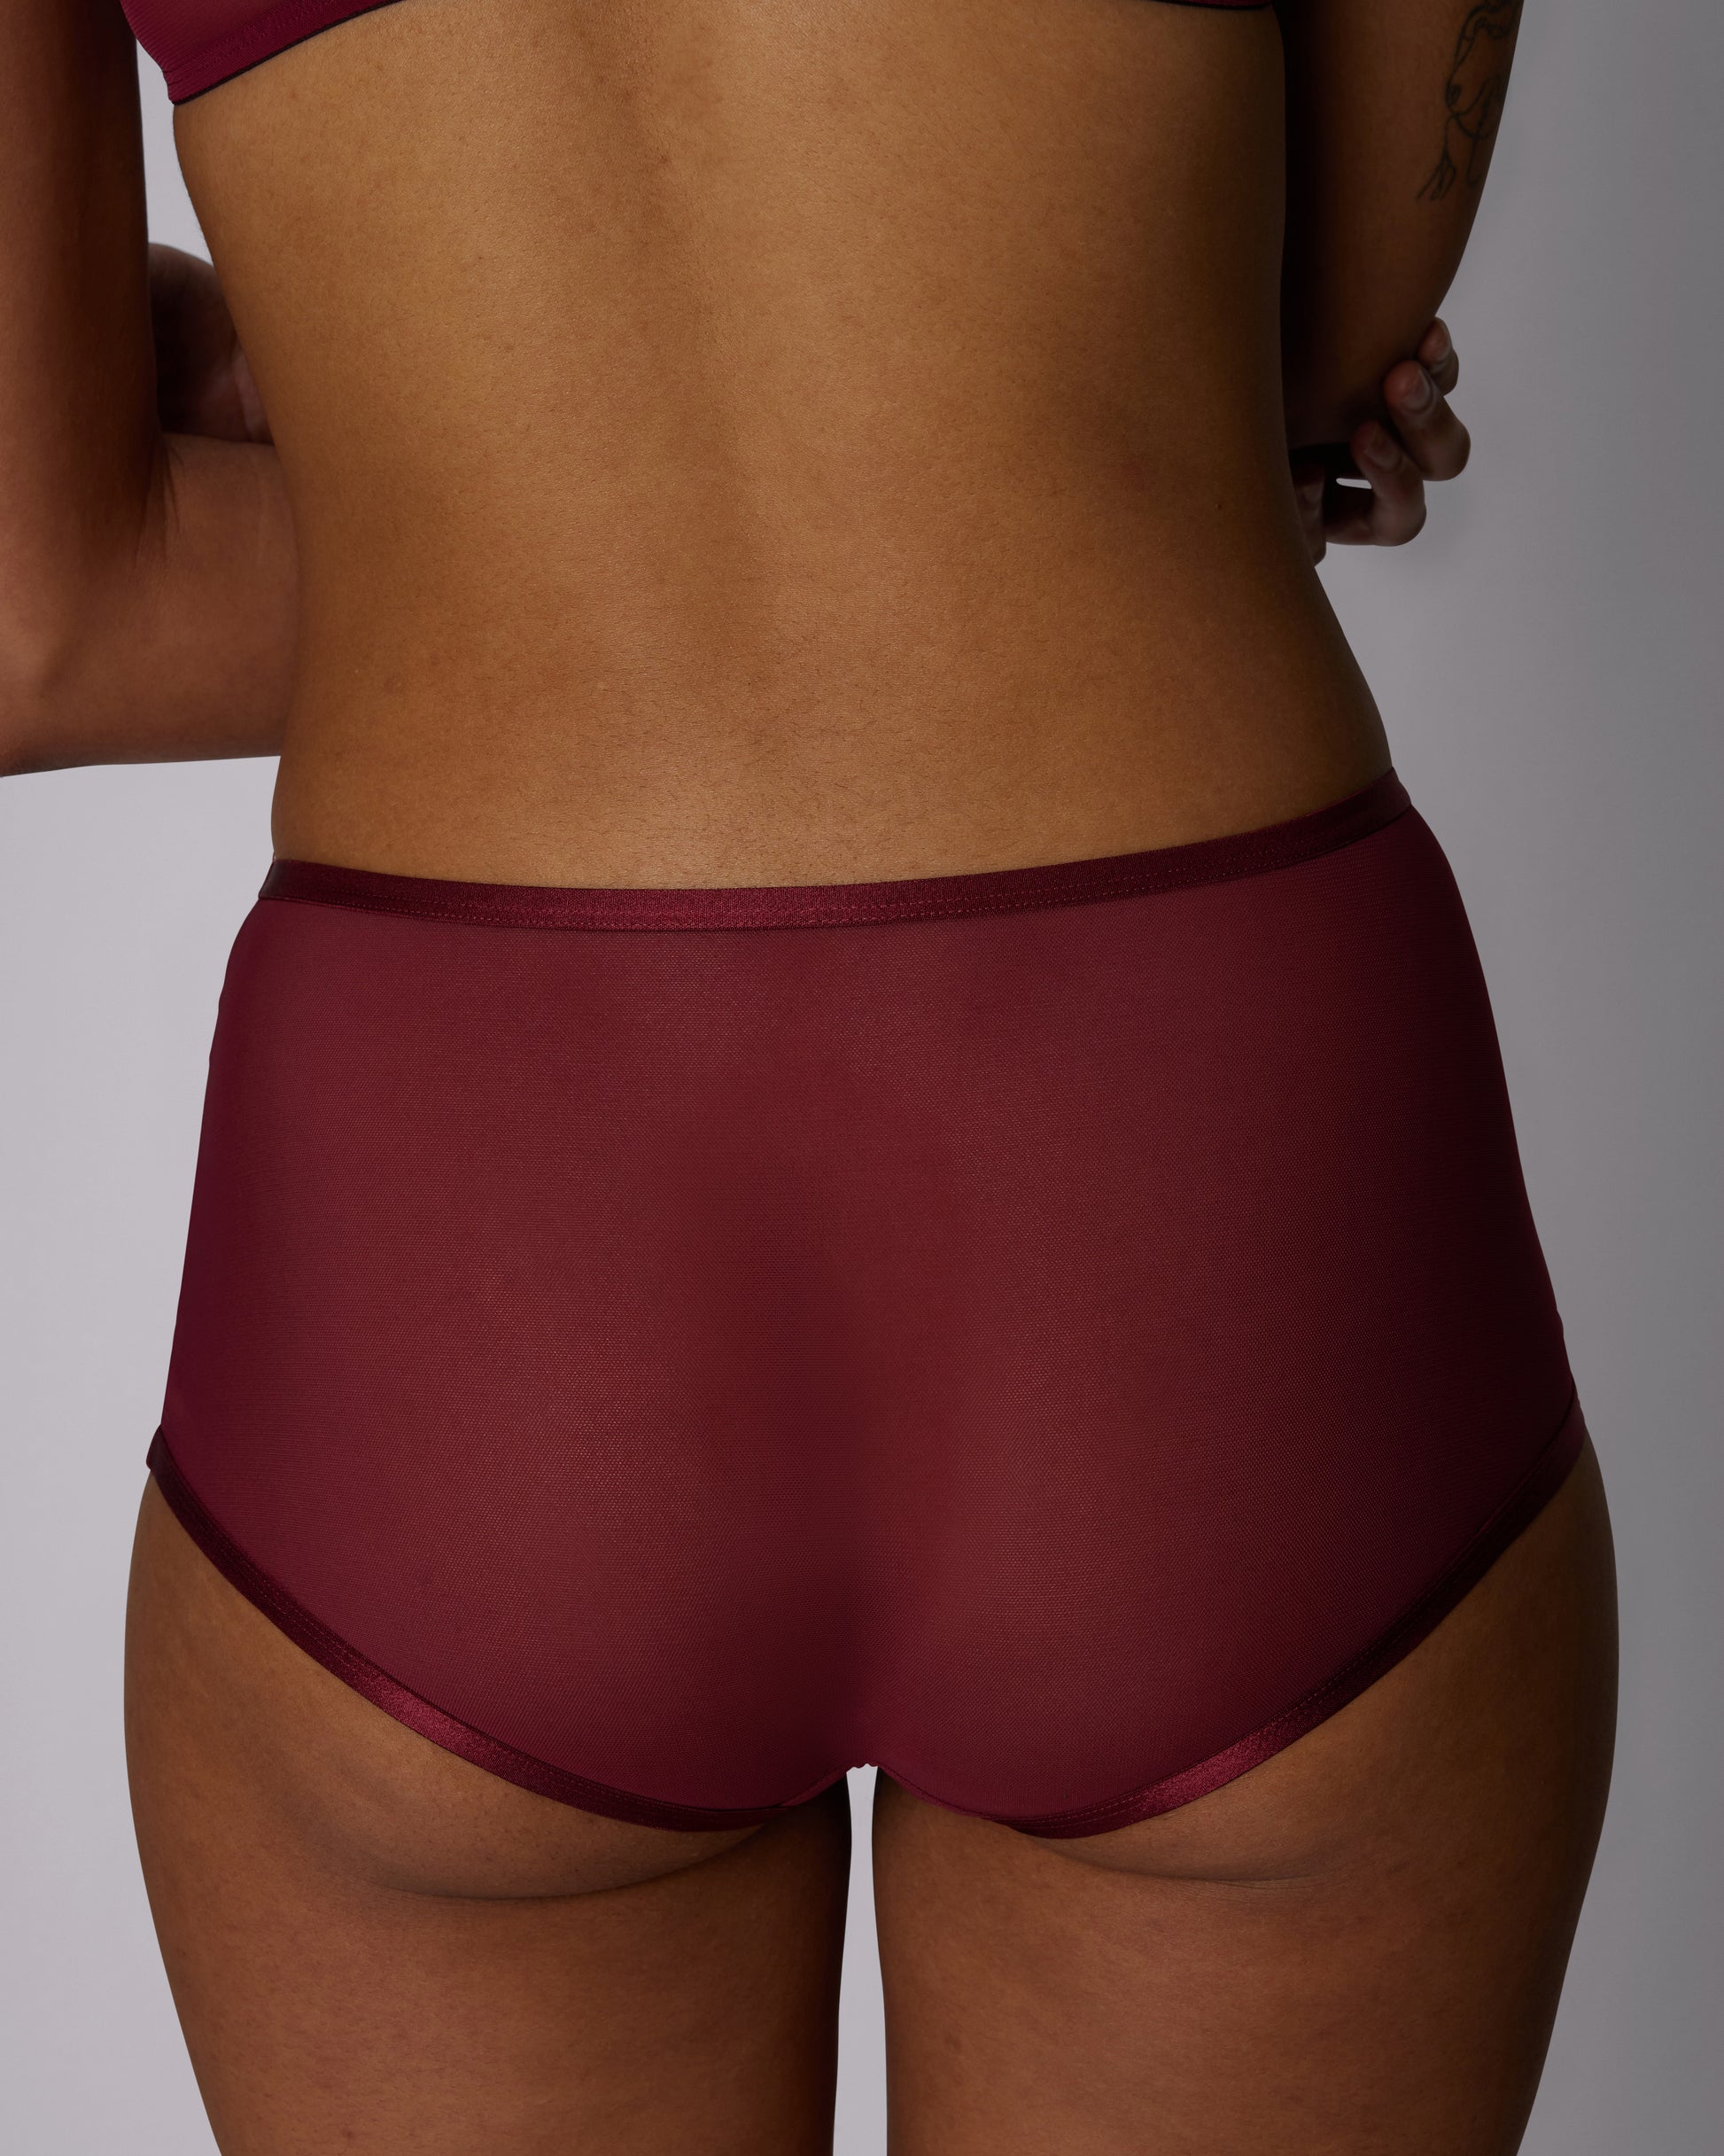 Silky Lace High Rise Boyshort, Women's Underwear, Starting at $15